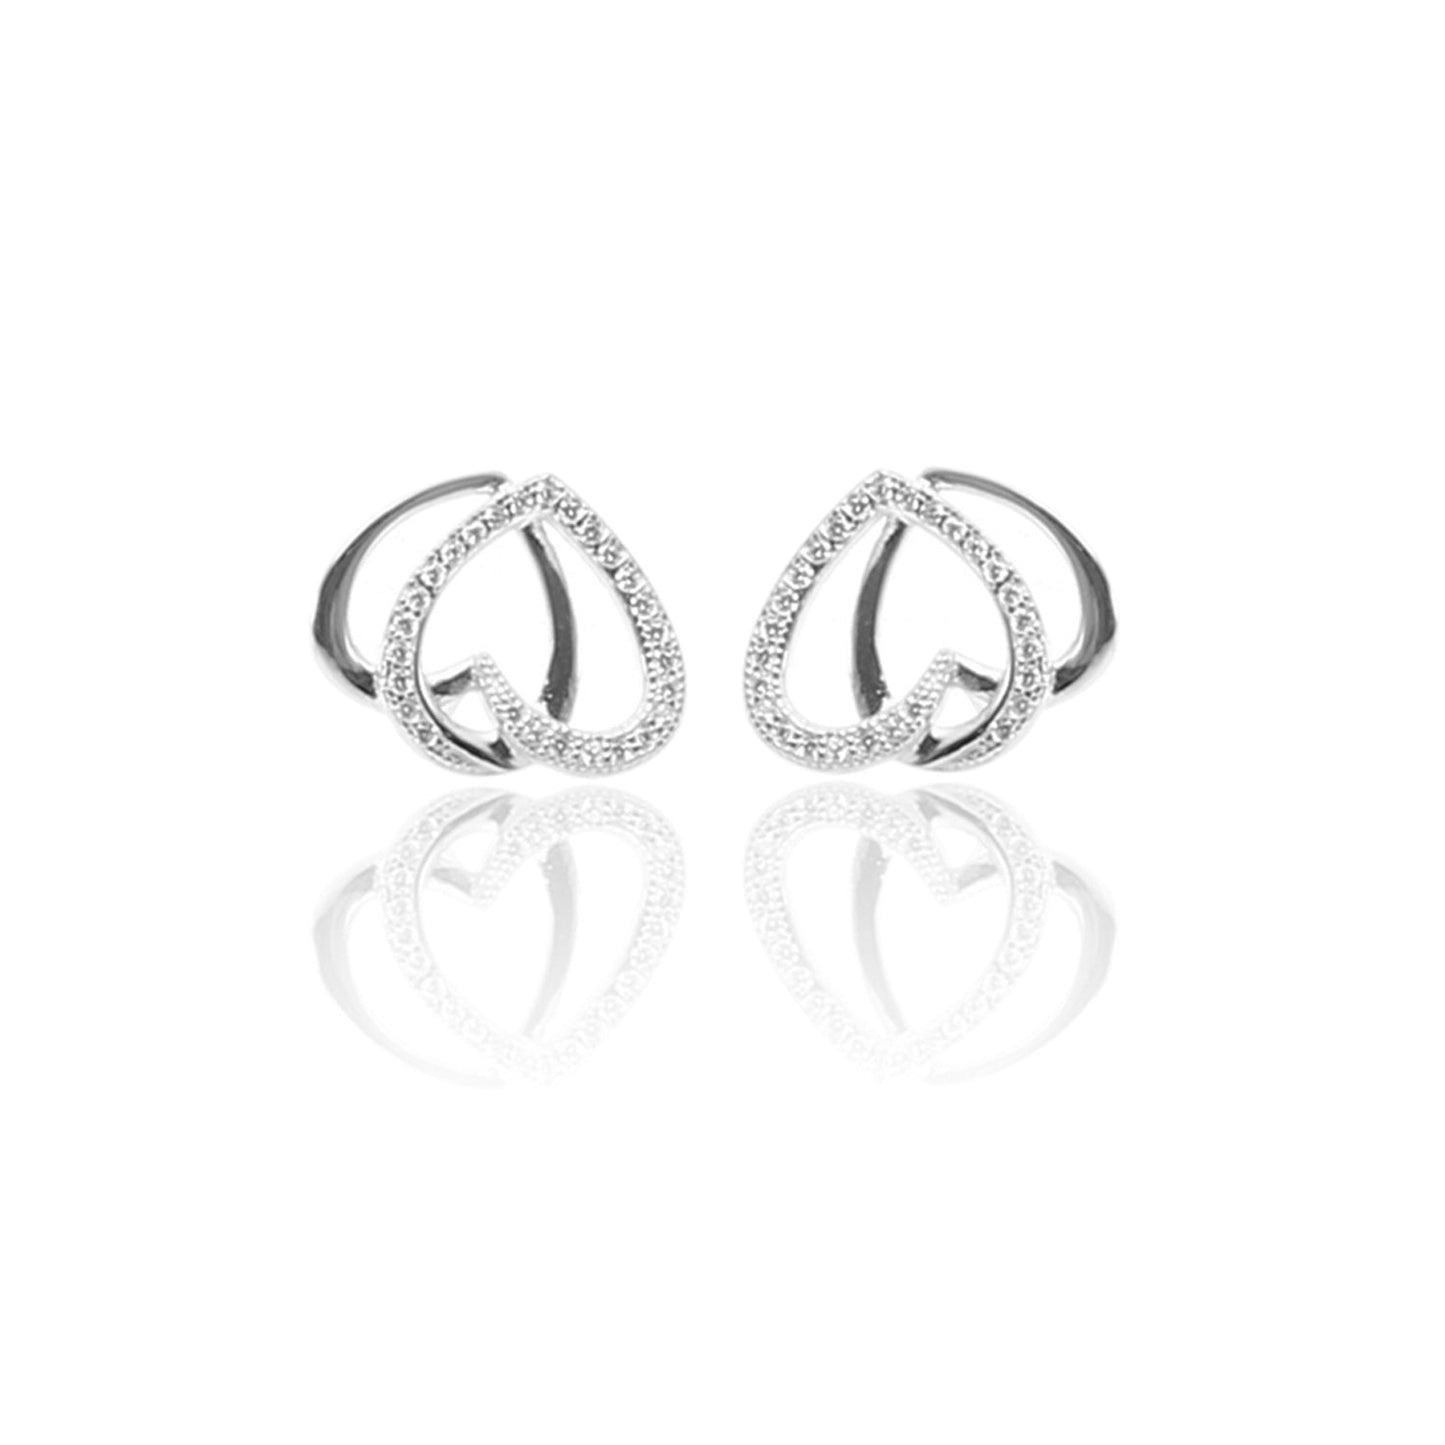 Interlocking Hearts Pendant Necklace and Earrings Set - ARJW1025RD ARCADIO